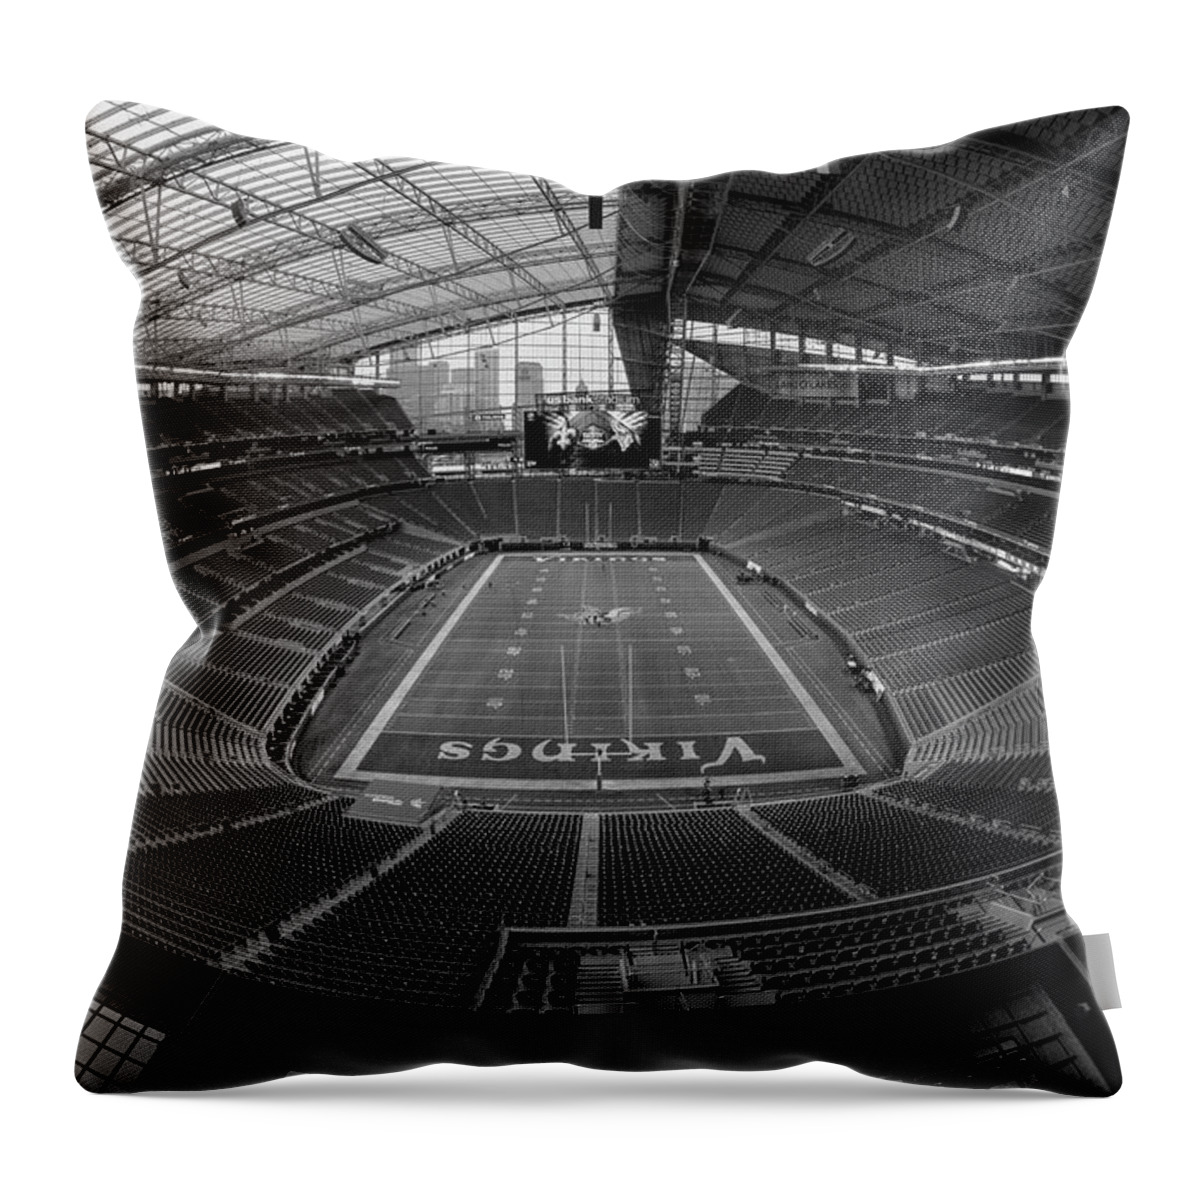 Us Bank Stadium Throw Pillow featuring the photograph Minnesota Vikings #69 by Robert Hayton